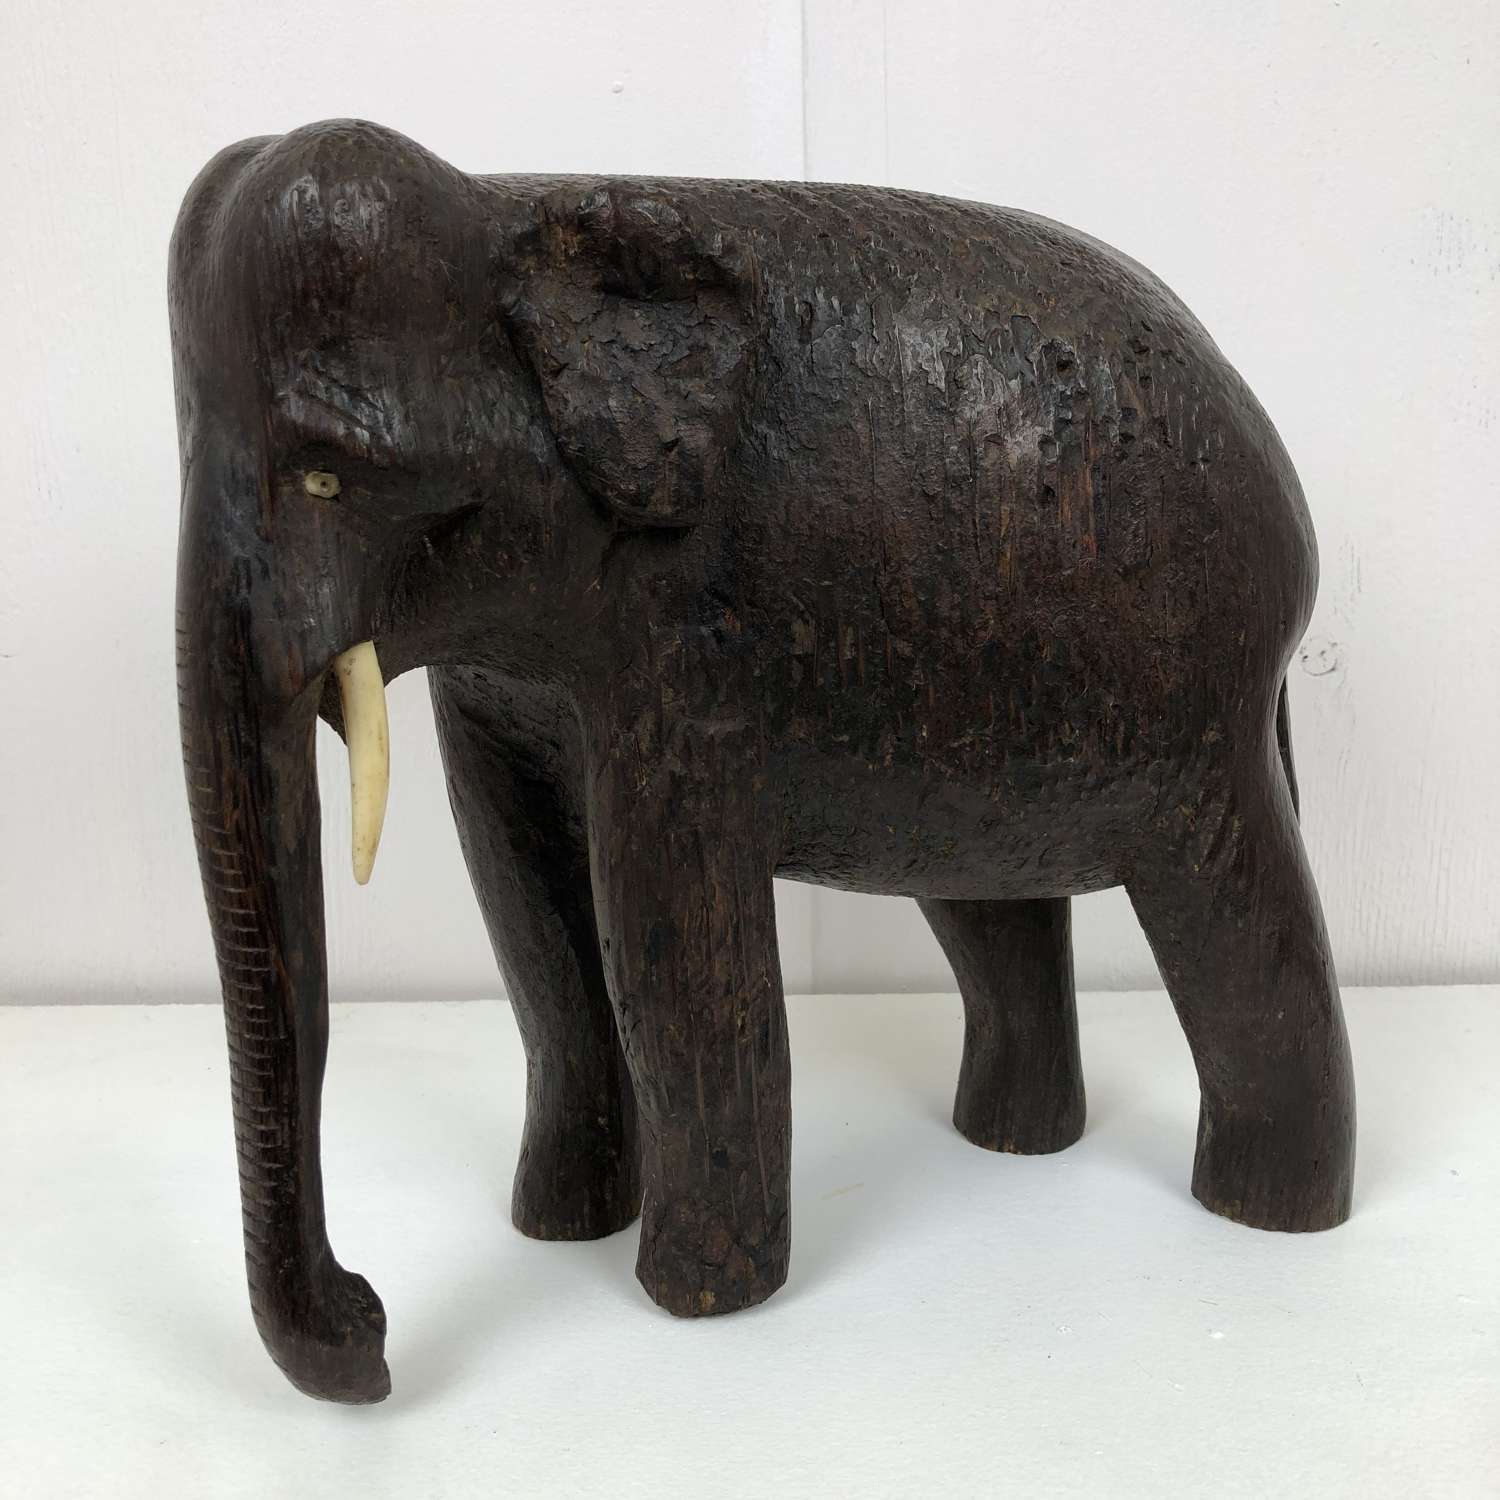 A carved wood Asian elephant